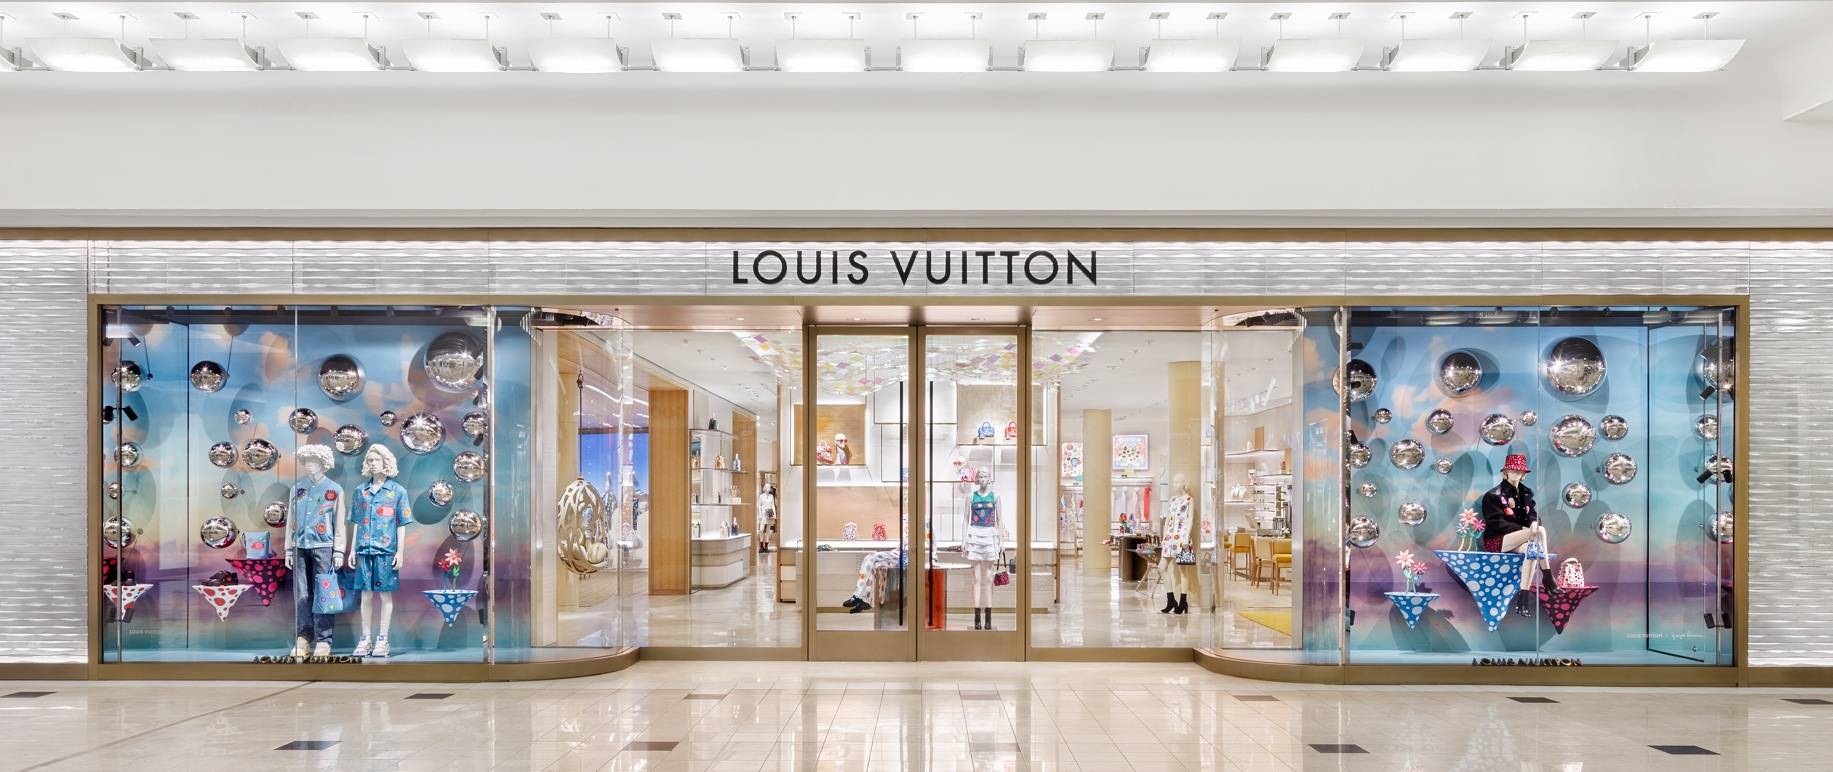 Louis Vuitton Perpetuates Primary Color Trend To New Atlanta